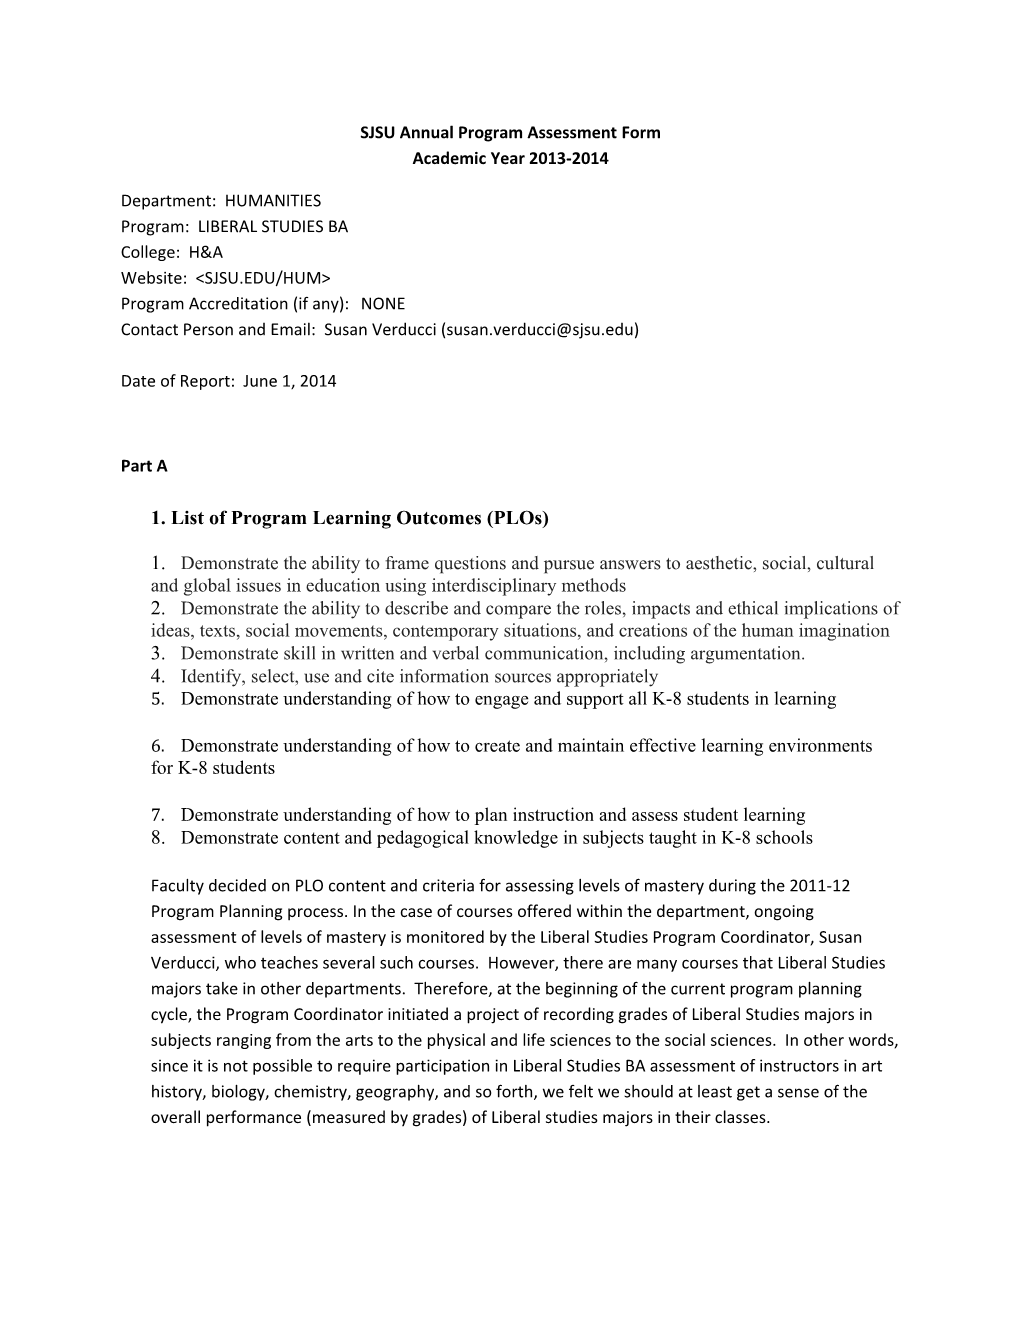 1. List of Program Learning Outcomes (Plos)